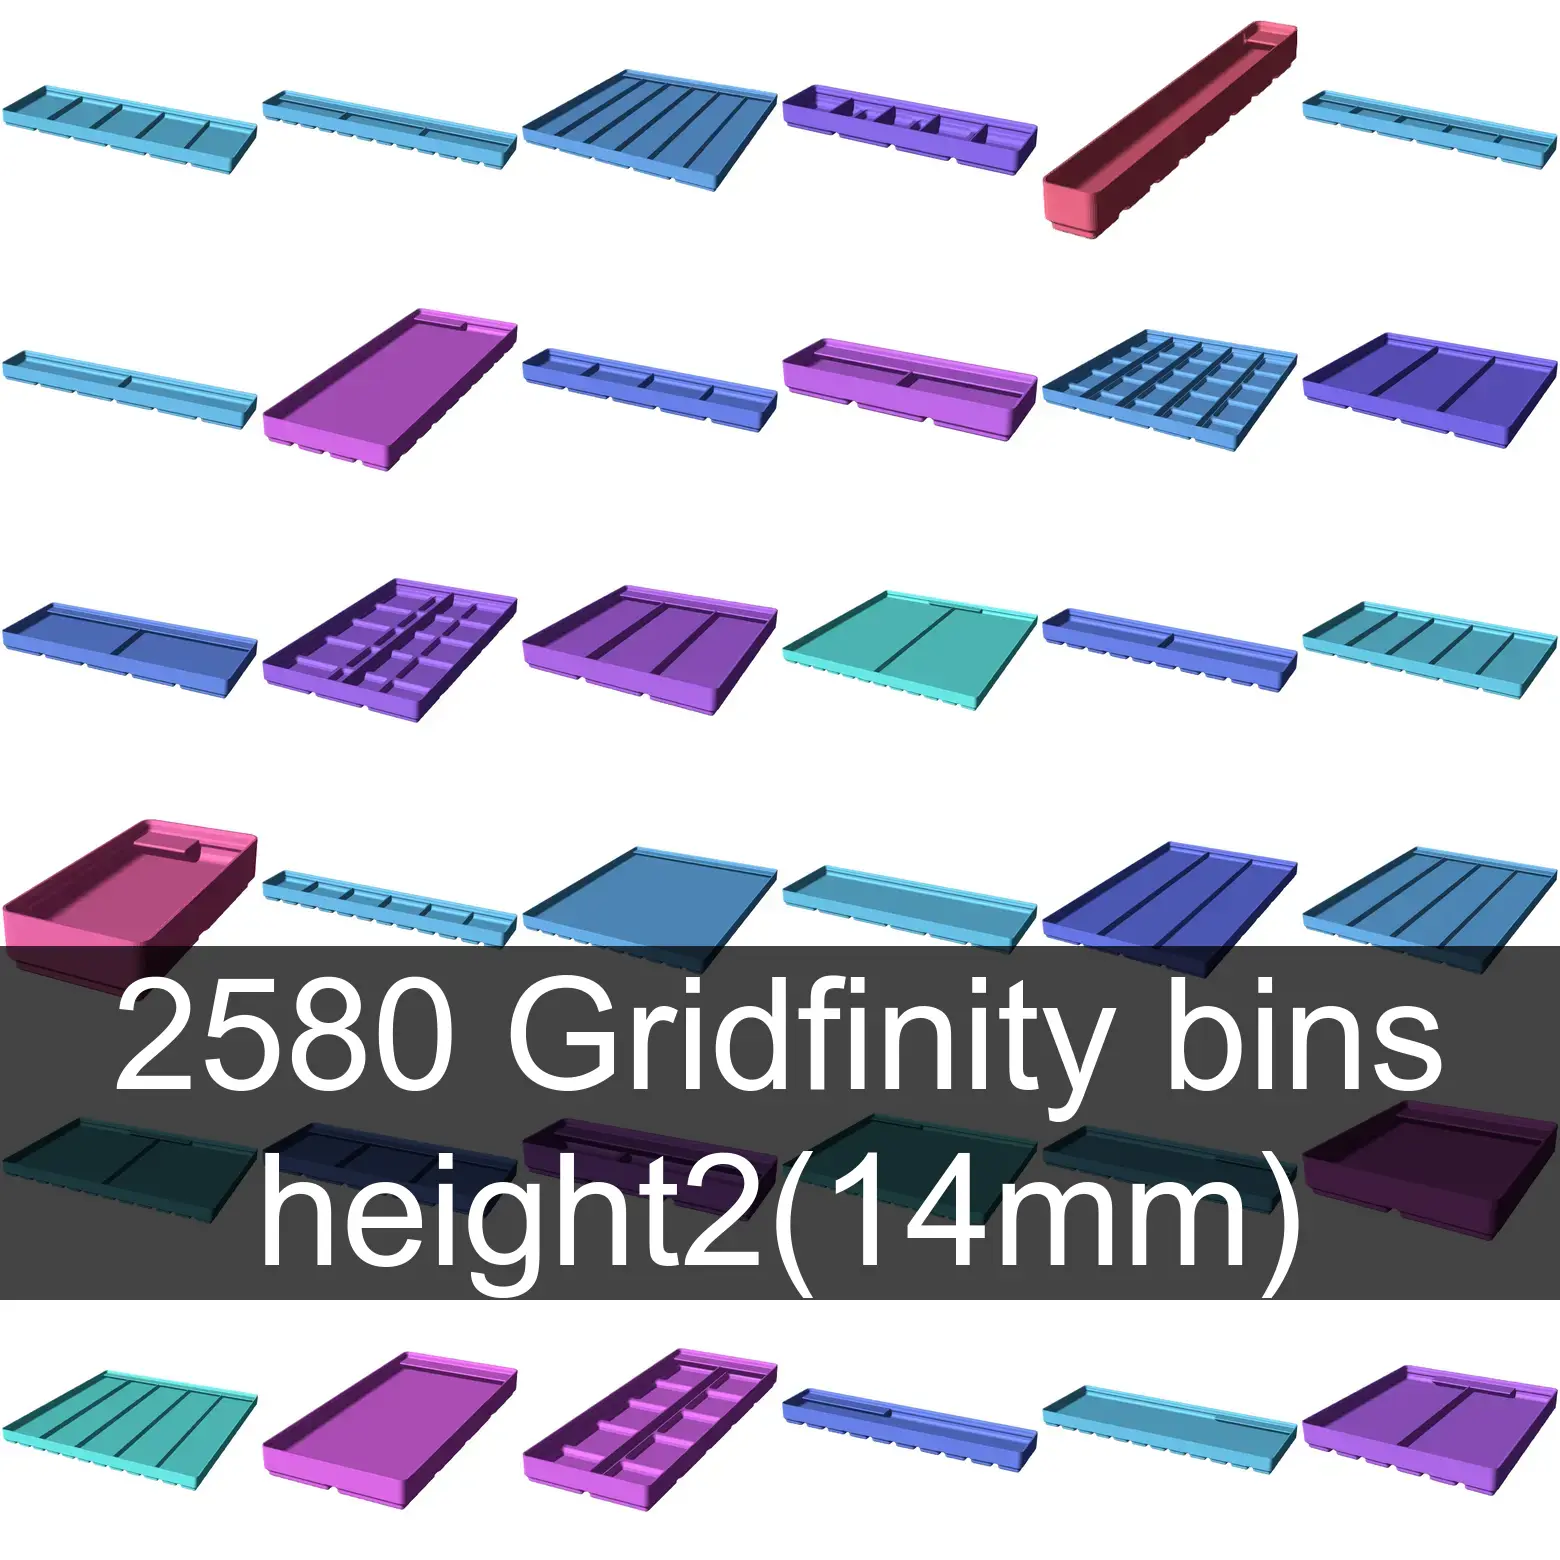 Gridfinity bins - height 2 (14mm)